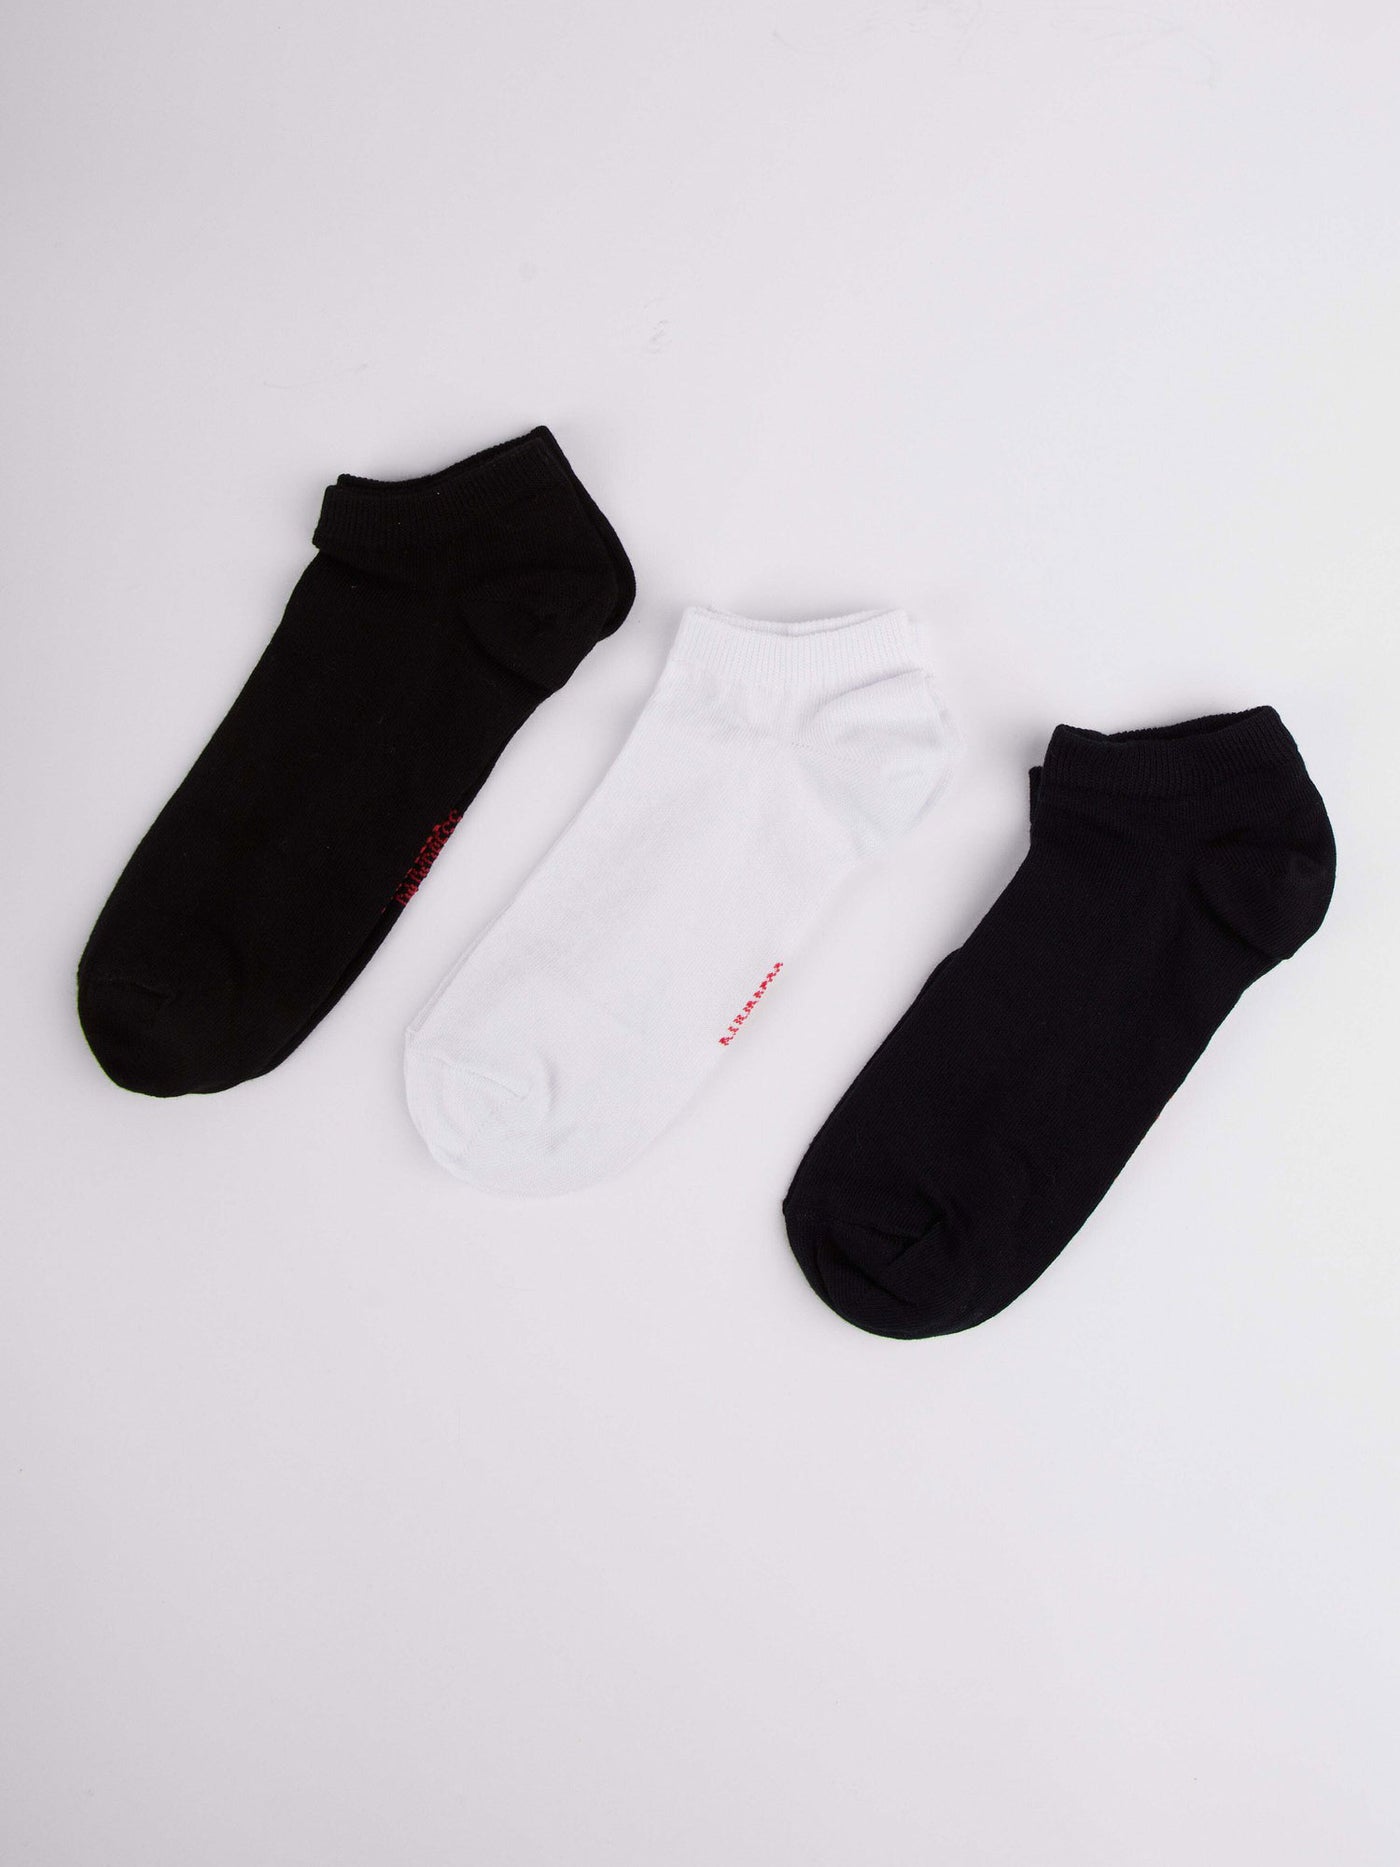 Socks - Ankle Length - 3 Pairs